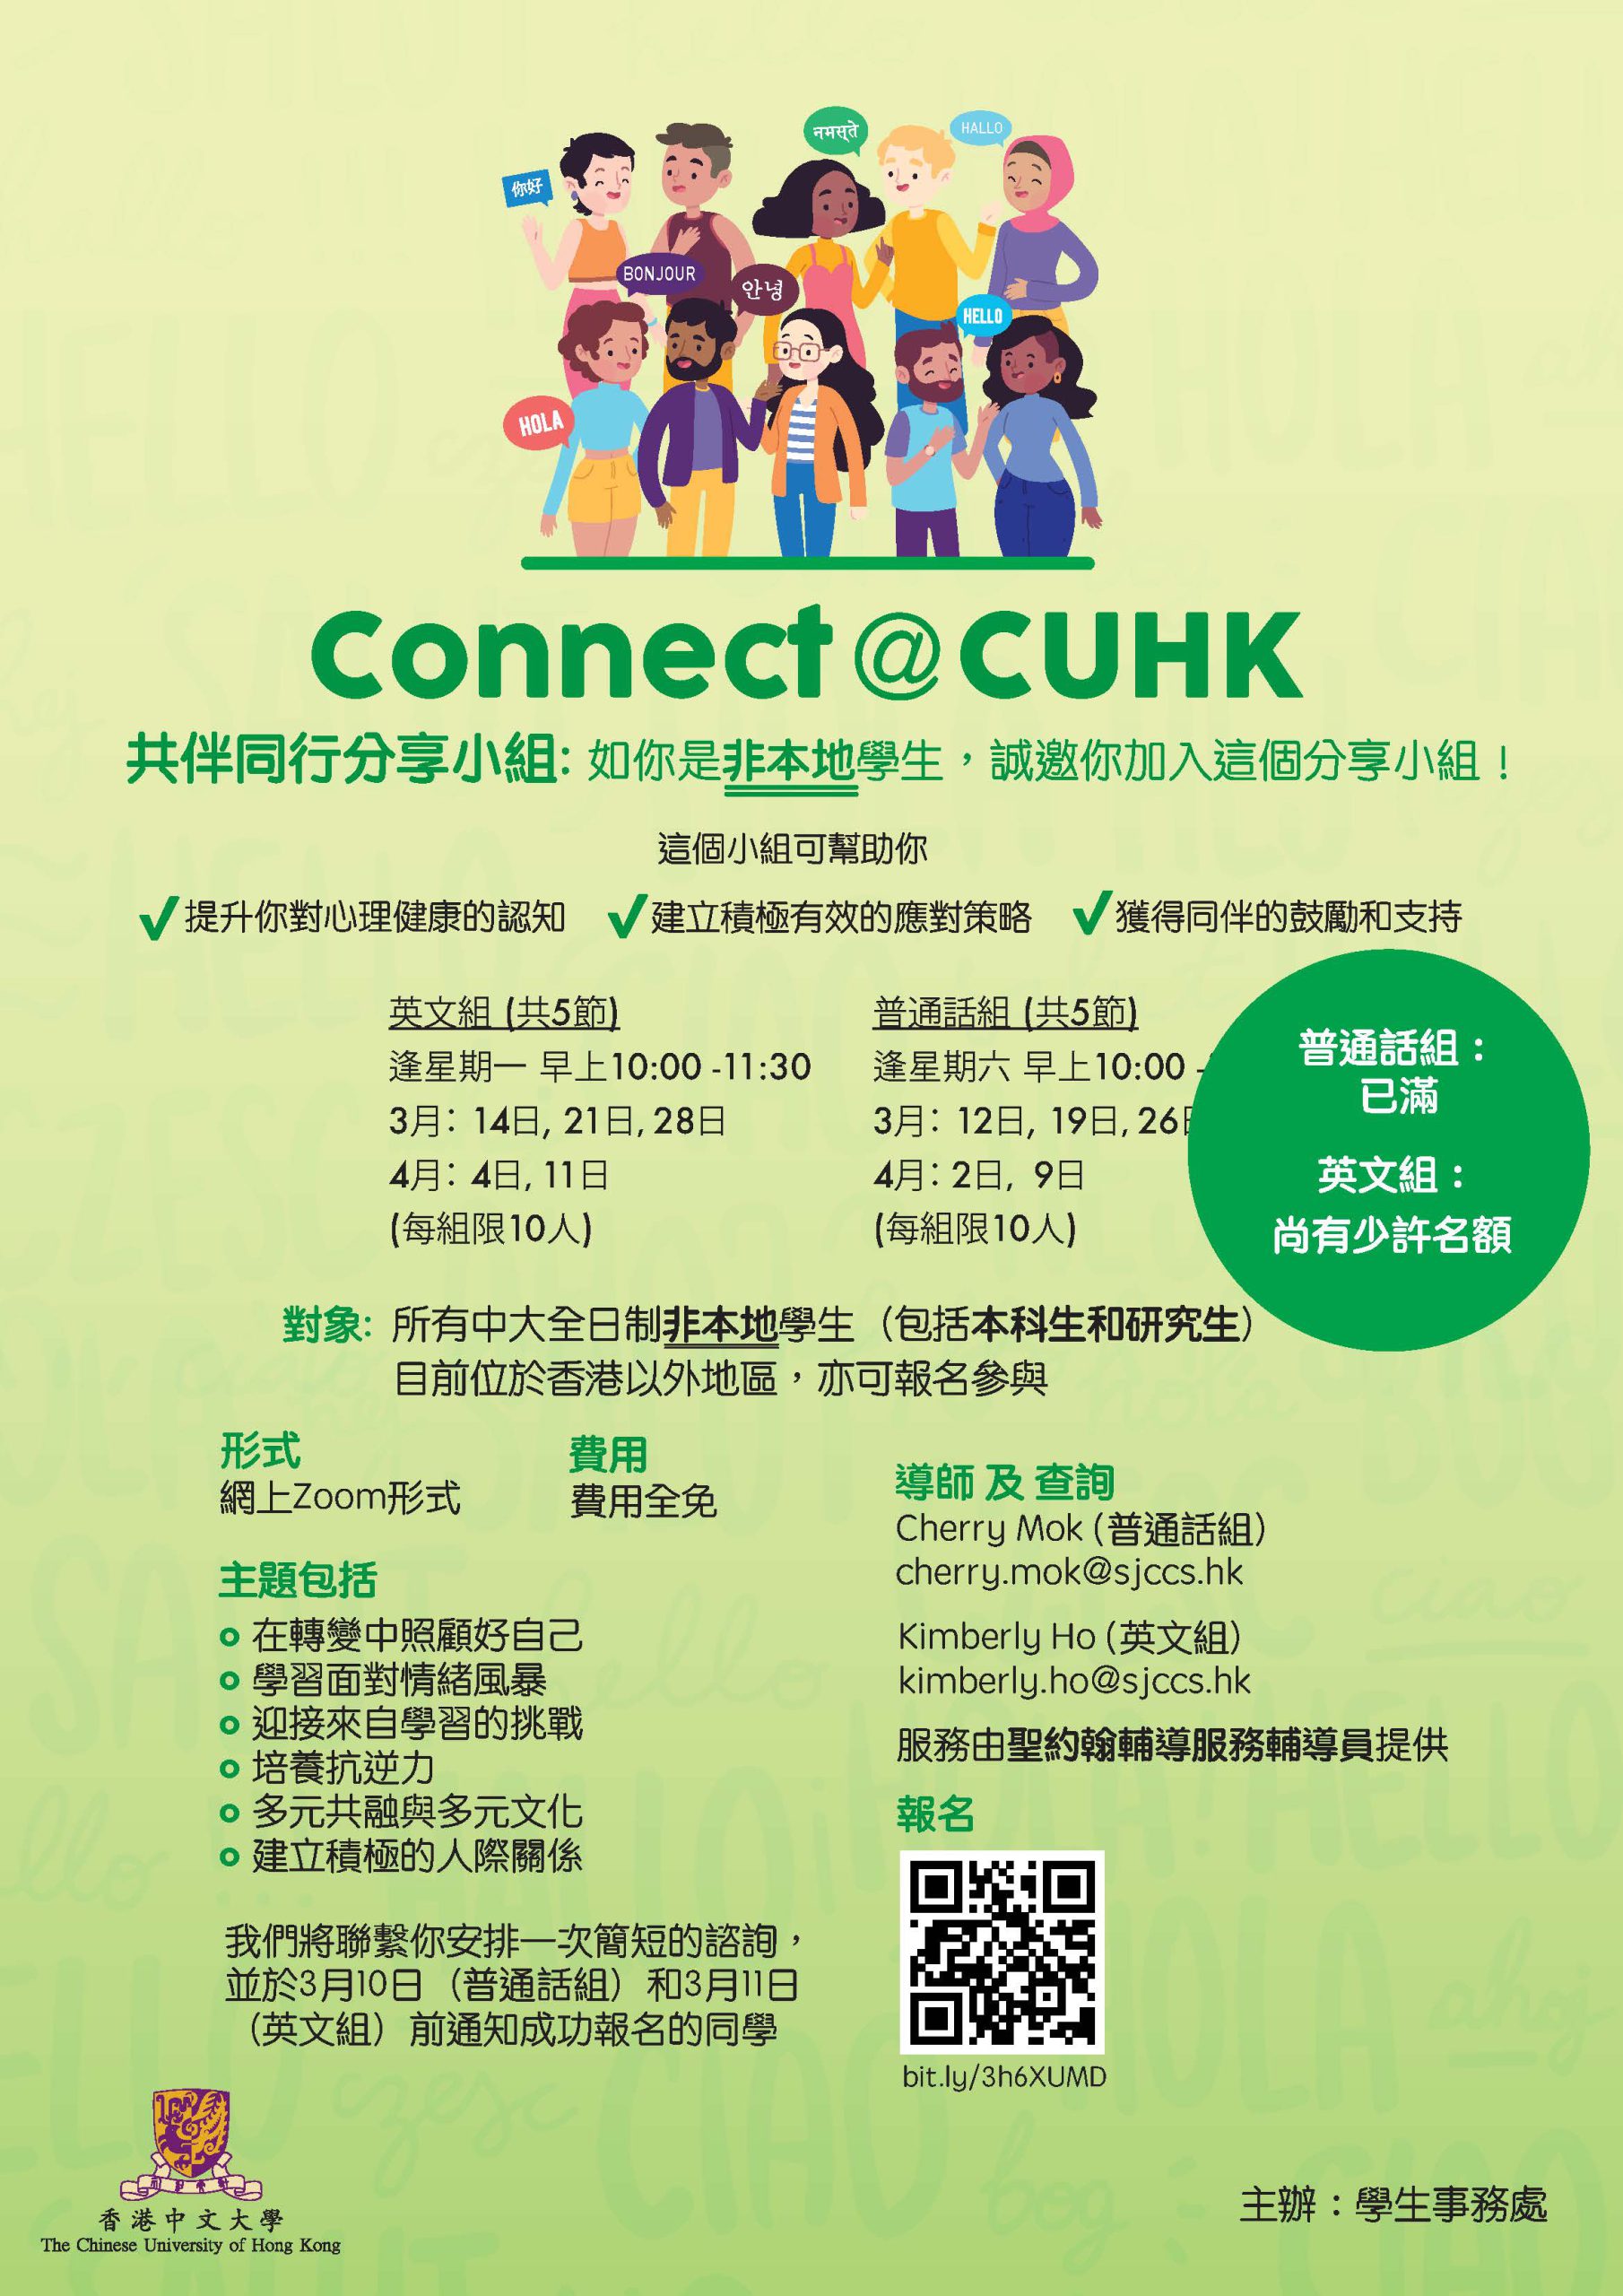 Connect@CUHK 共伴同行分享小組: 為非本地學生提供的分享小組 @學生事務處